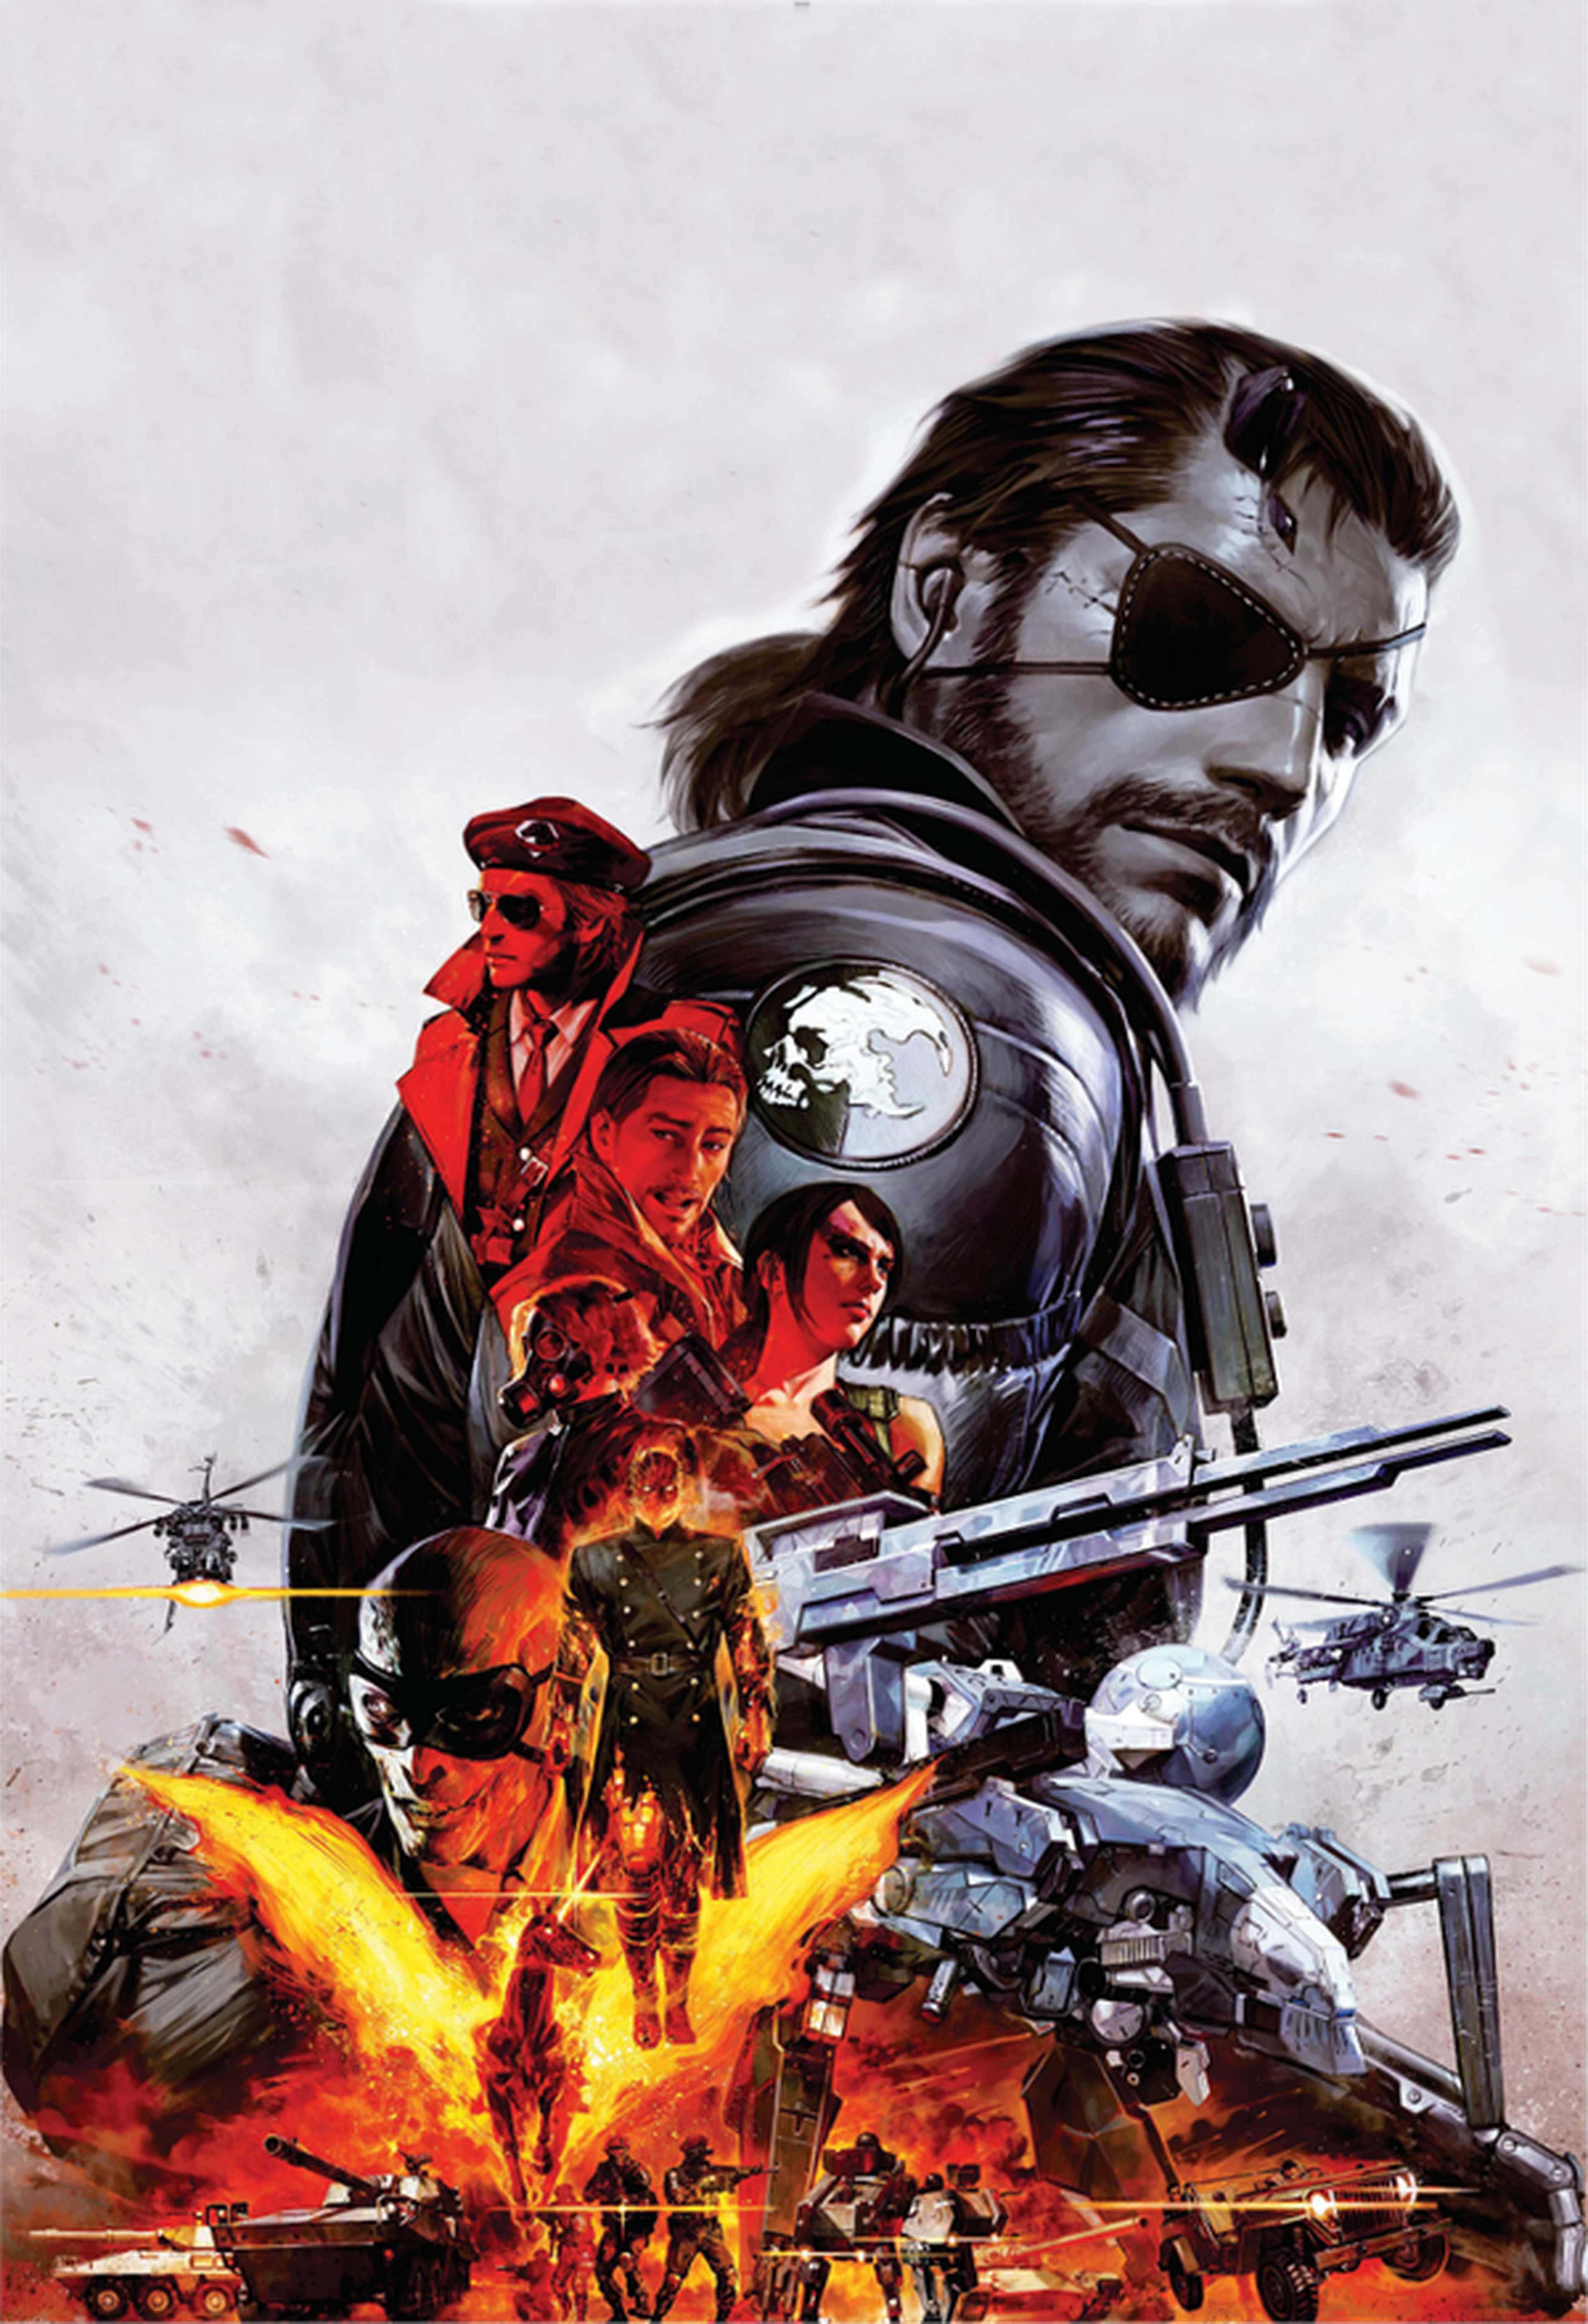 Avance de Metal Gear Solid 5 The Phantom Pain